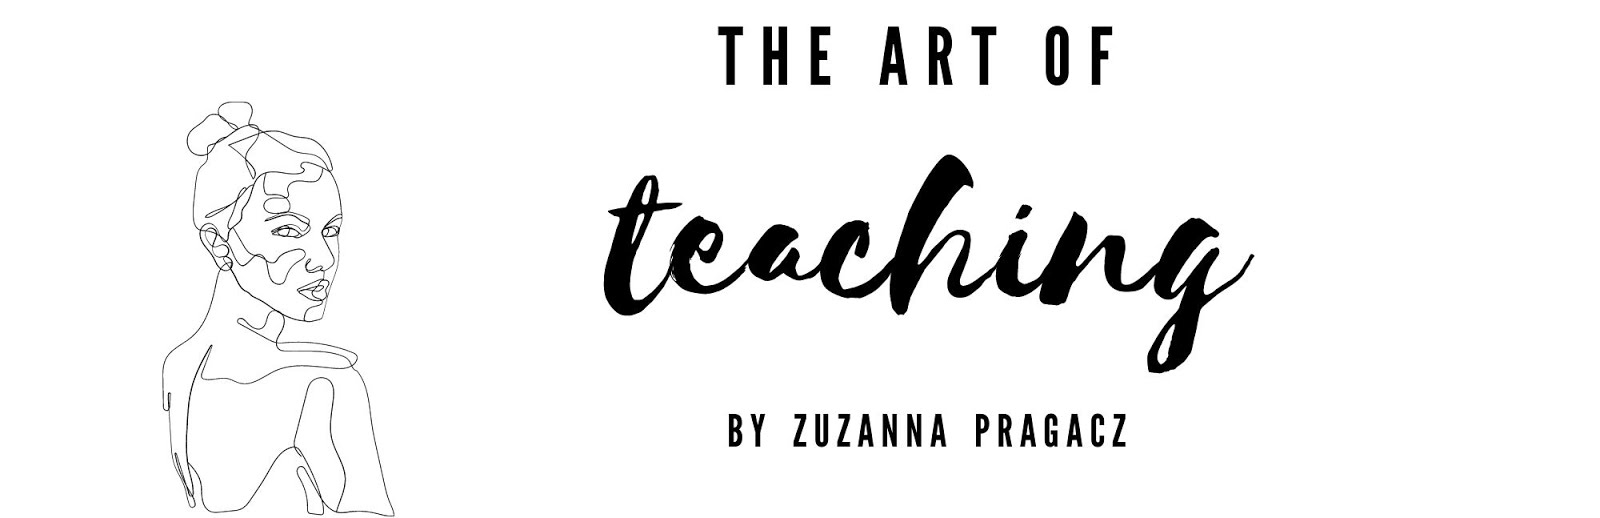 The art of teaching